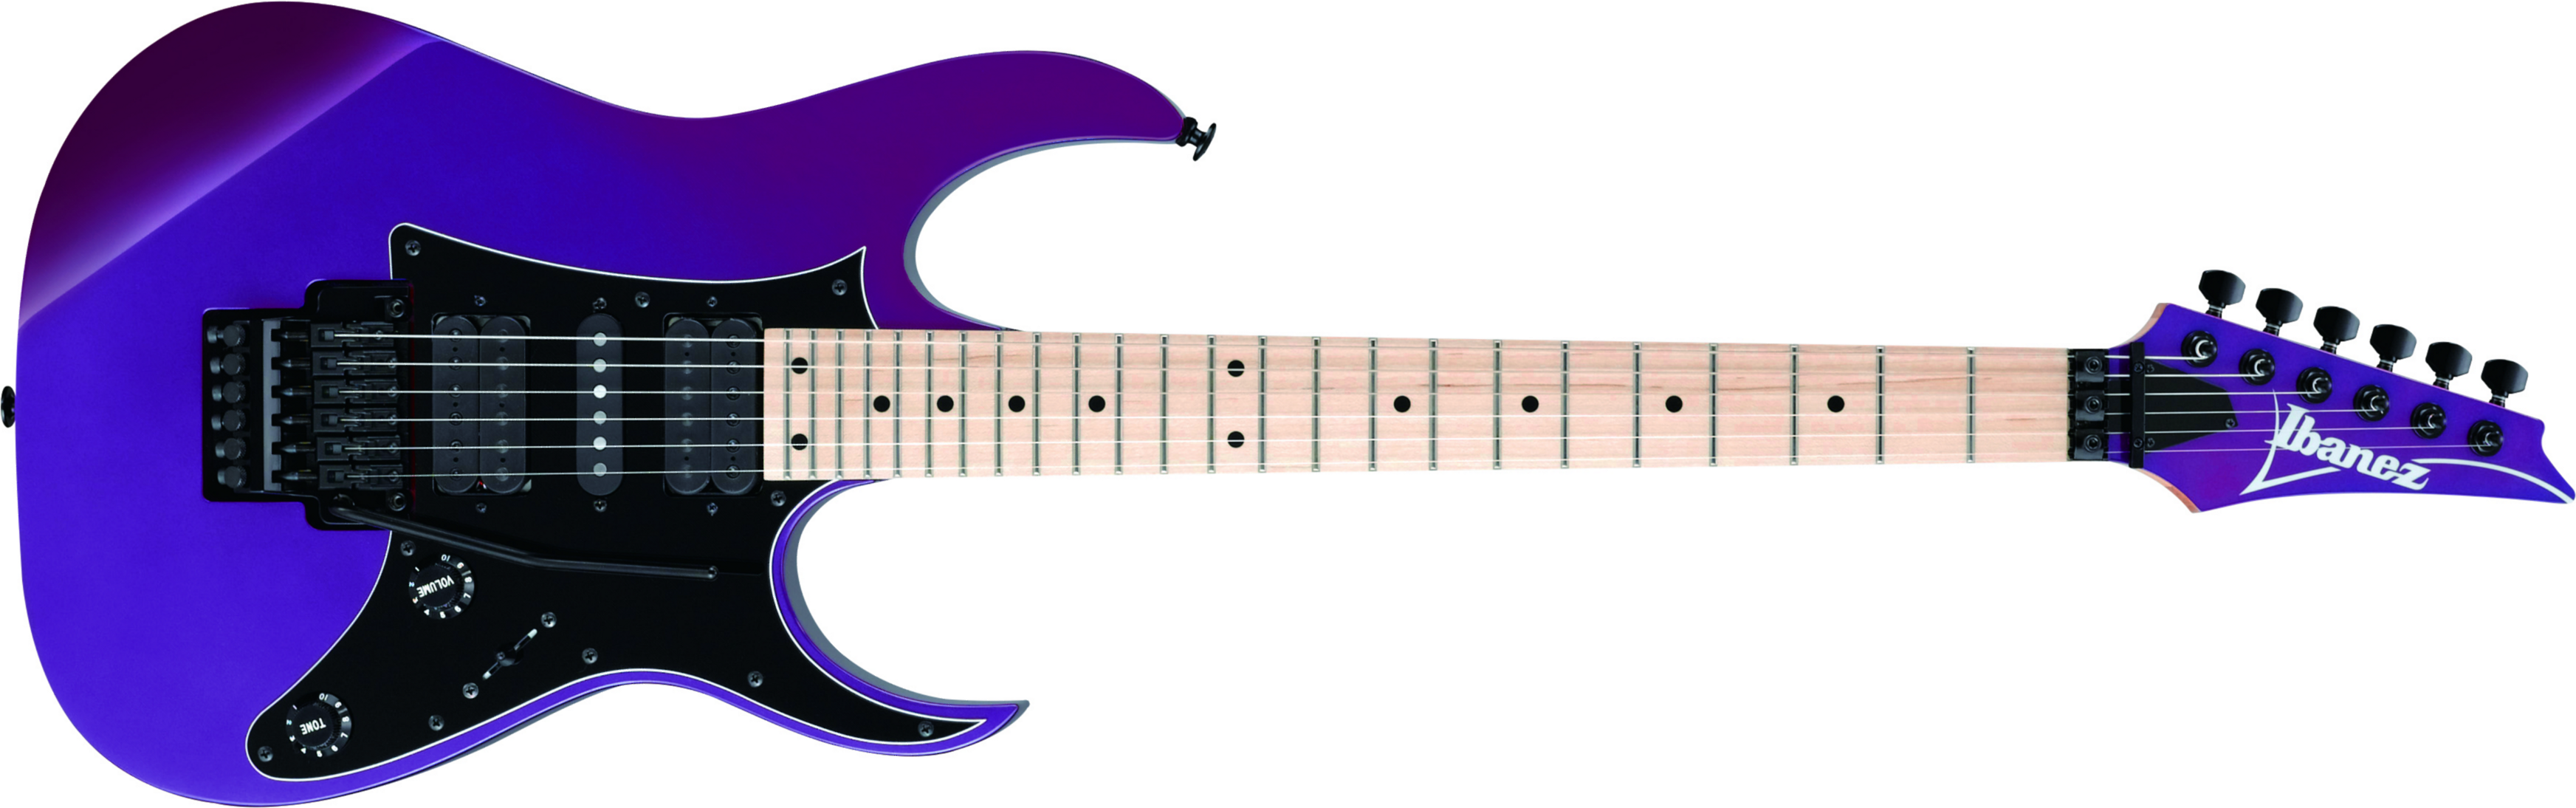 Ibanez Rg550 Pn Genesis Japon Hsh Fr Mn - Purple Neon - E-Gitarre in Str-Form - Main picture